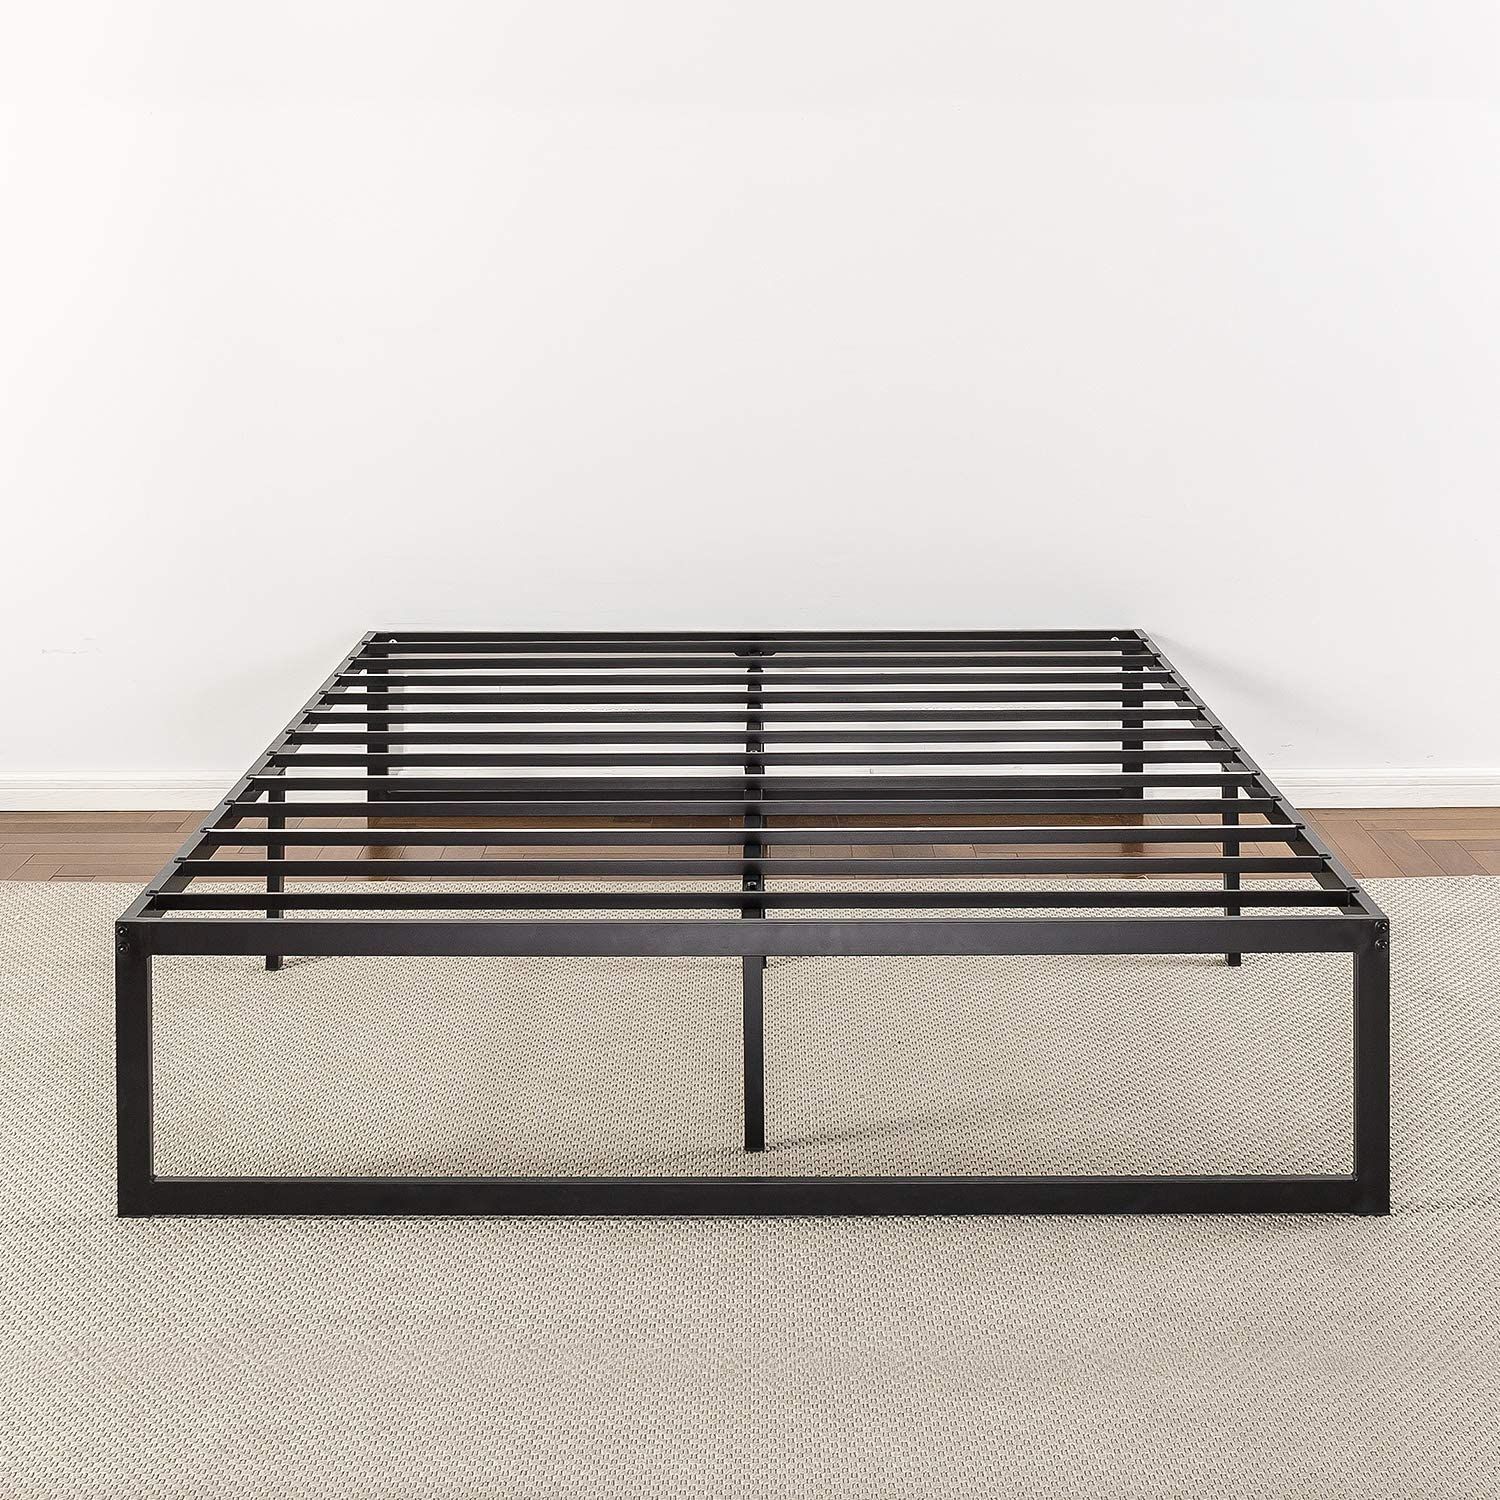 19 Best Metal Bed Frames 2020 The, Zinus 14 Inch Bed Frame